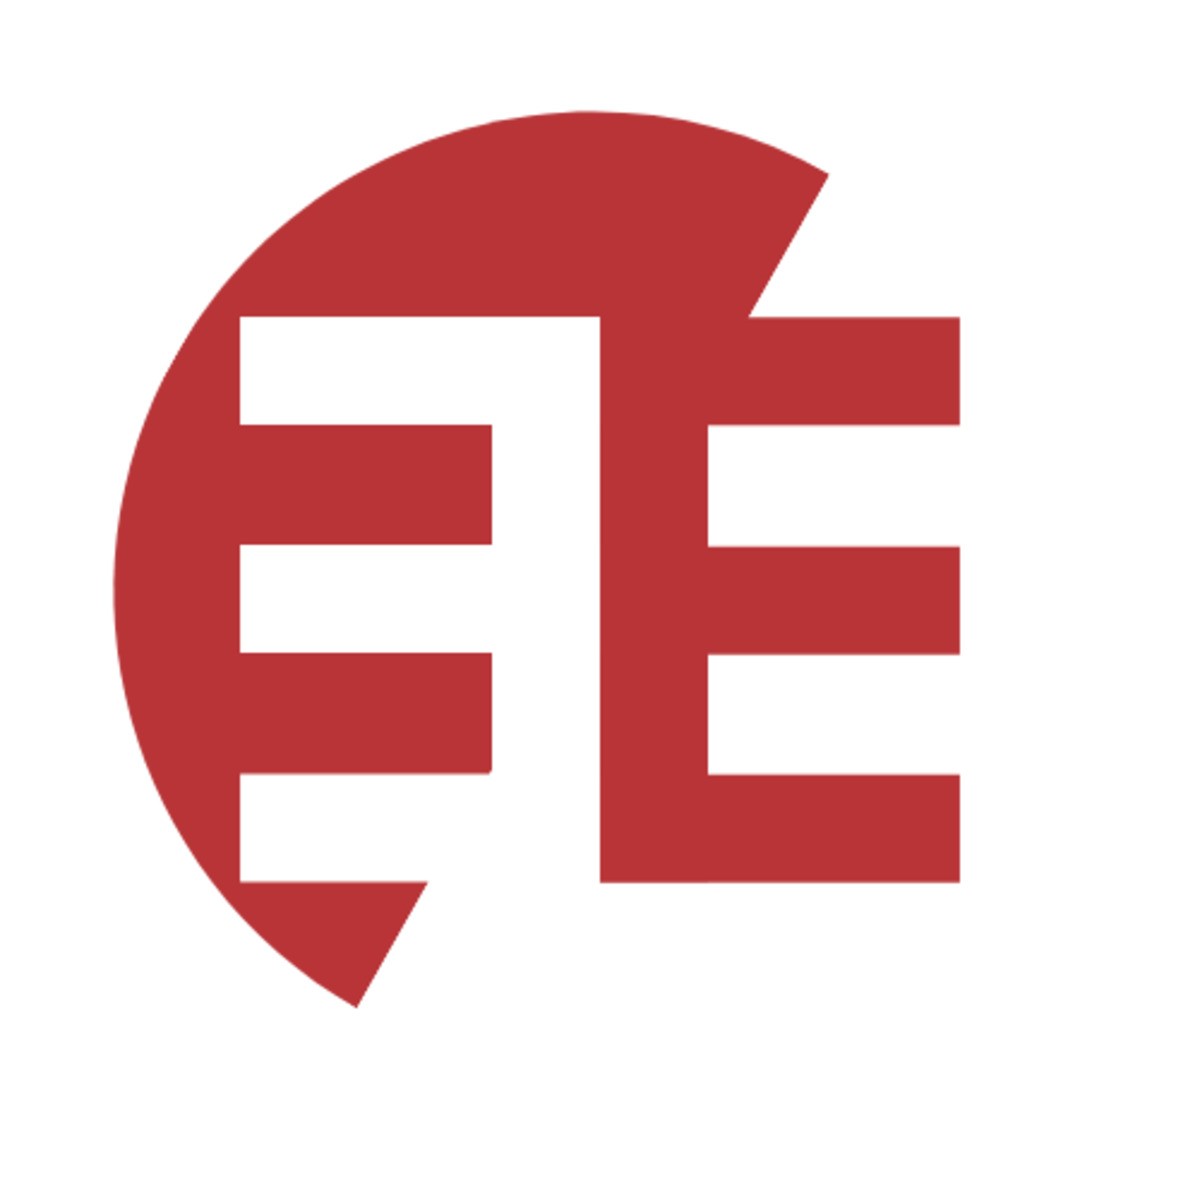 Service 3E - Echange Equivalent Ecoresponsable